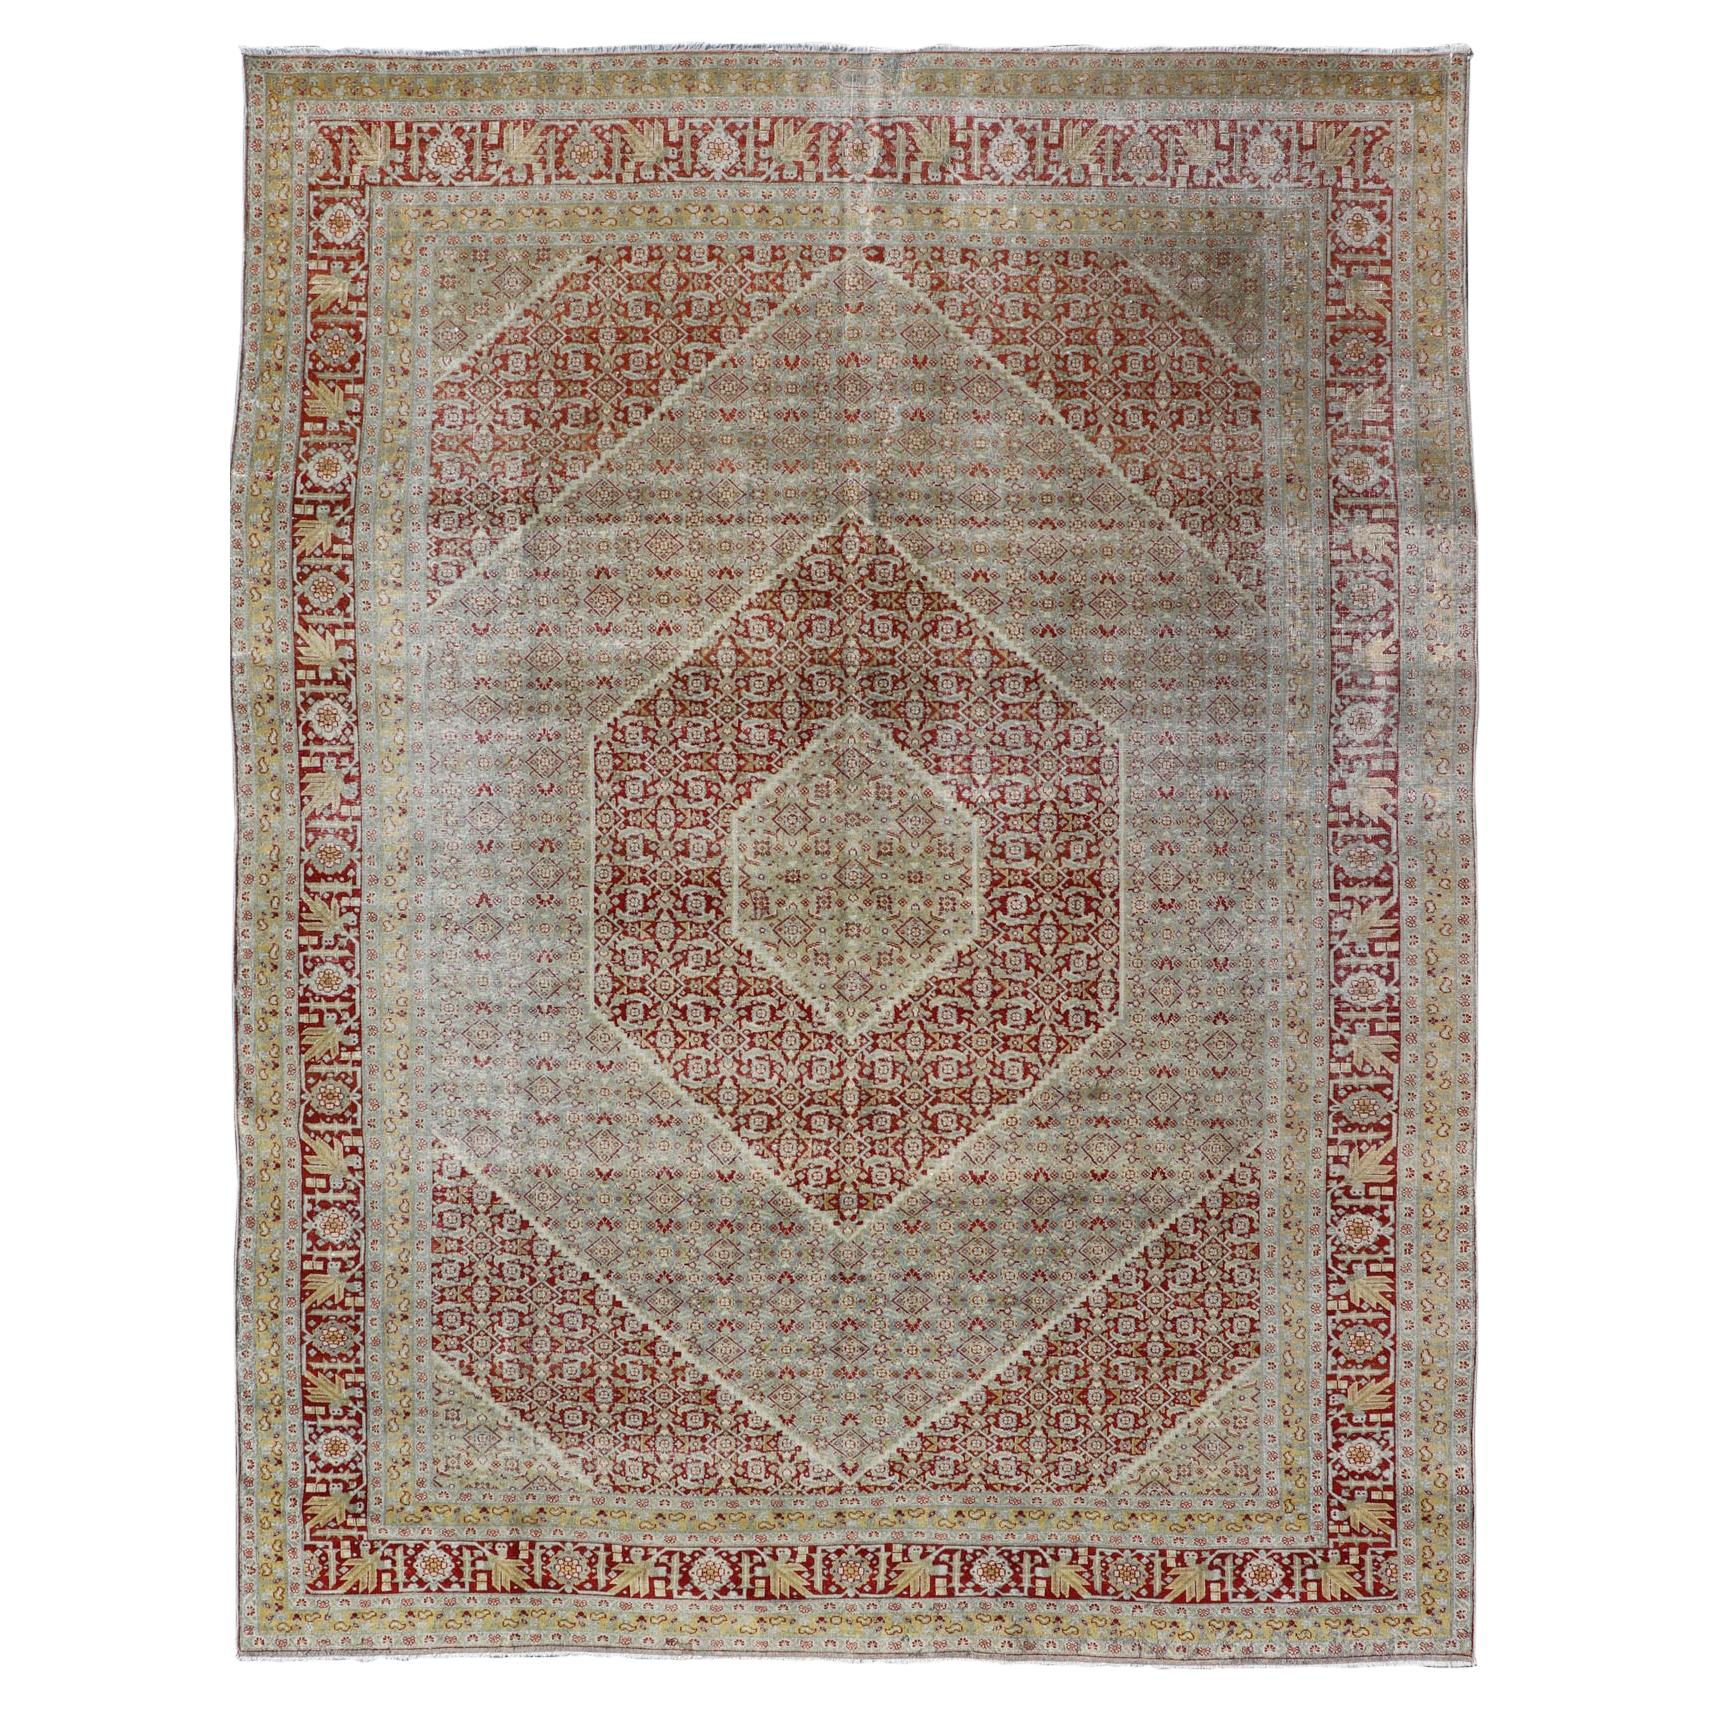 Antique Persian Tabriz Distressed Carpet with Geometric Diamond Design